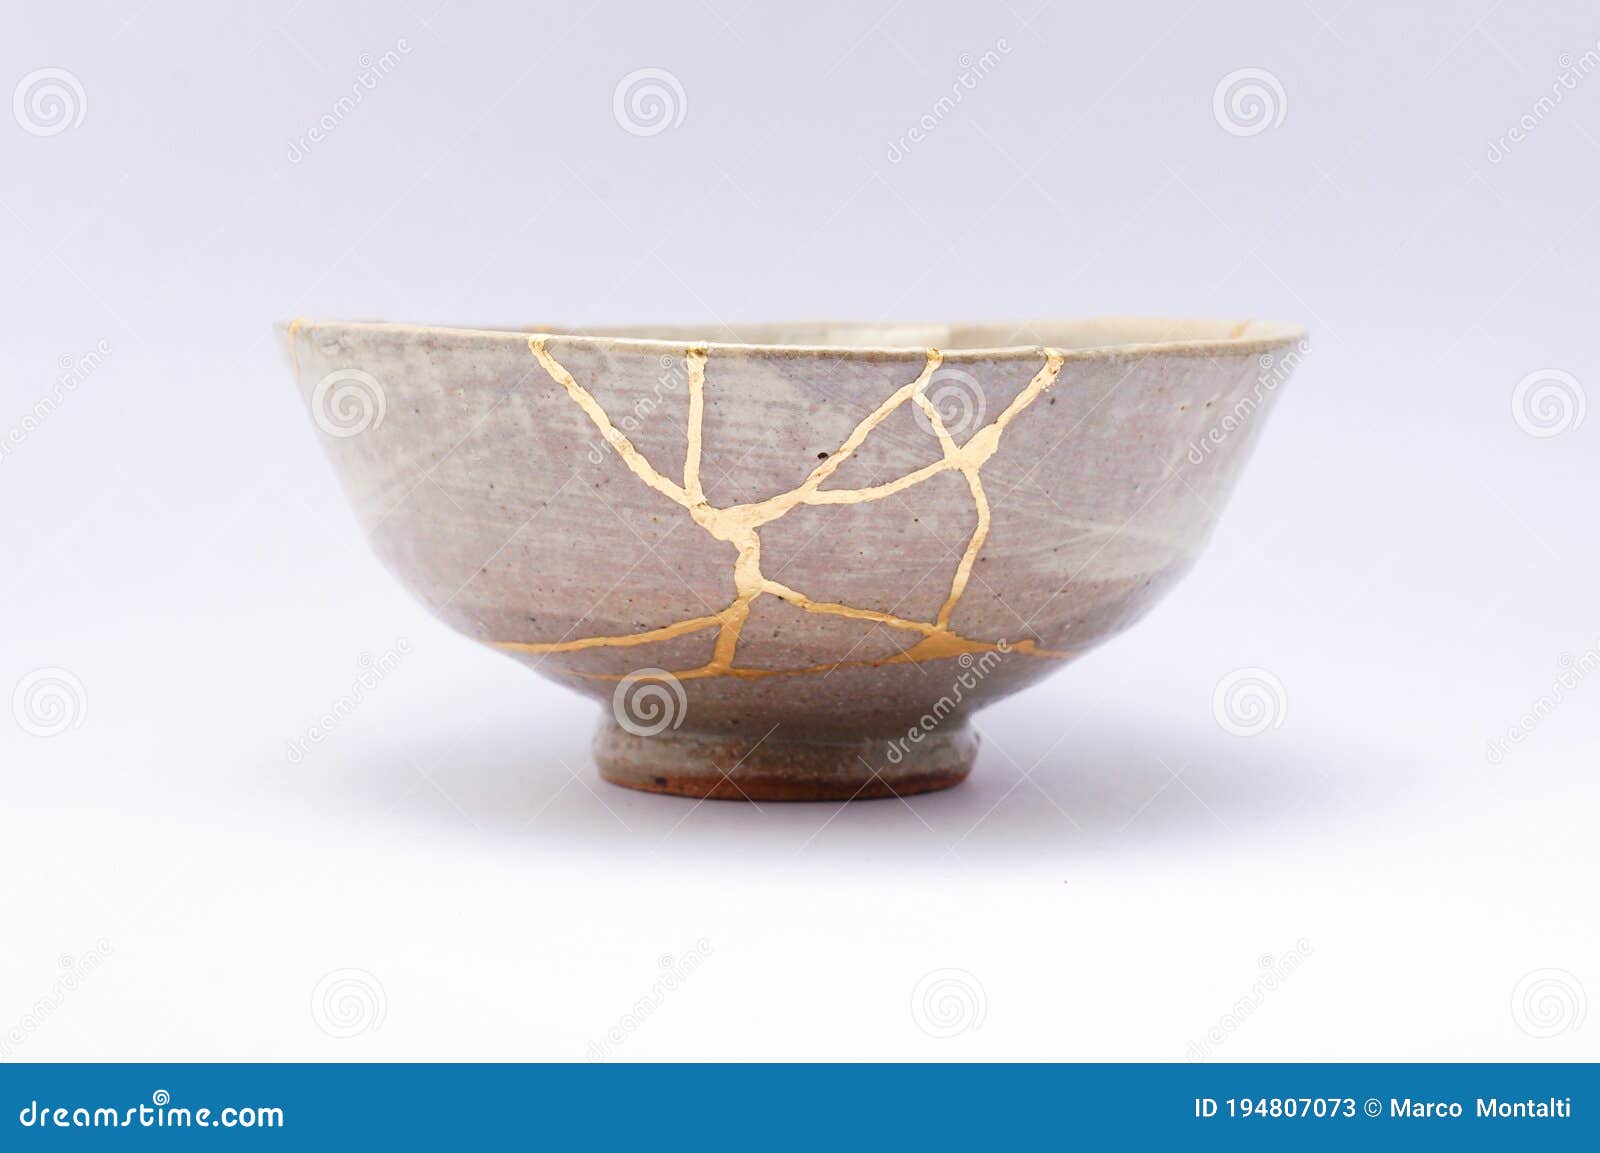 antique beautiful bowl restored with kintsugi gold technique